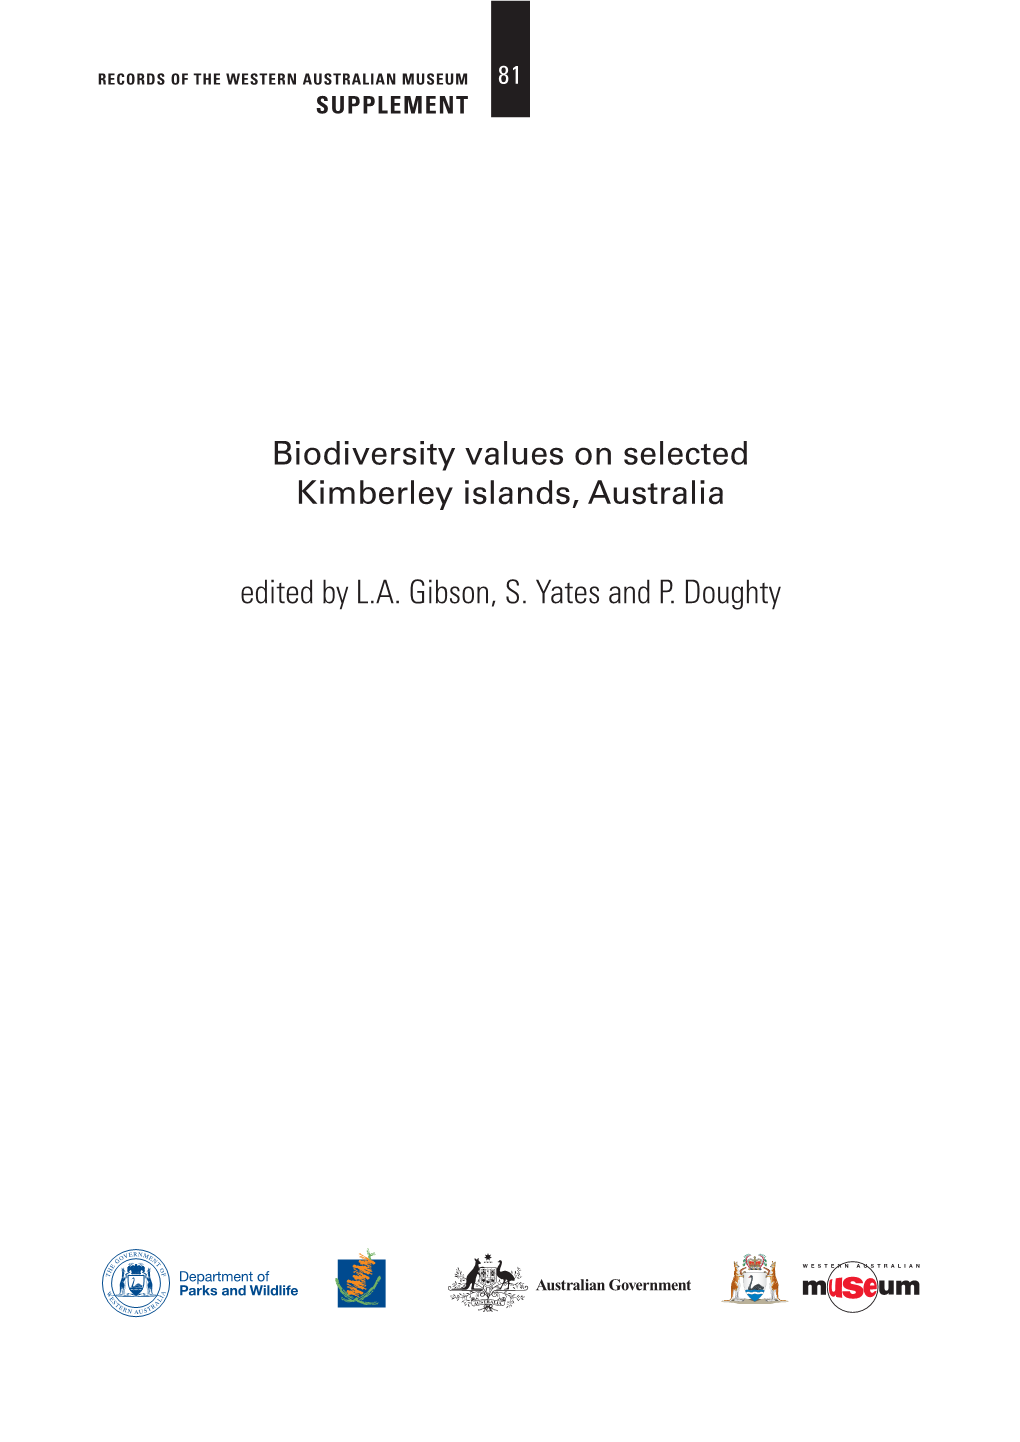 Biodiversity Values on Selected Kimberley Islands, Australia Edited